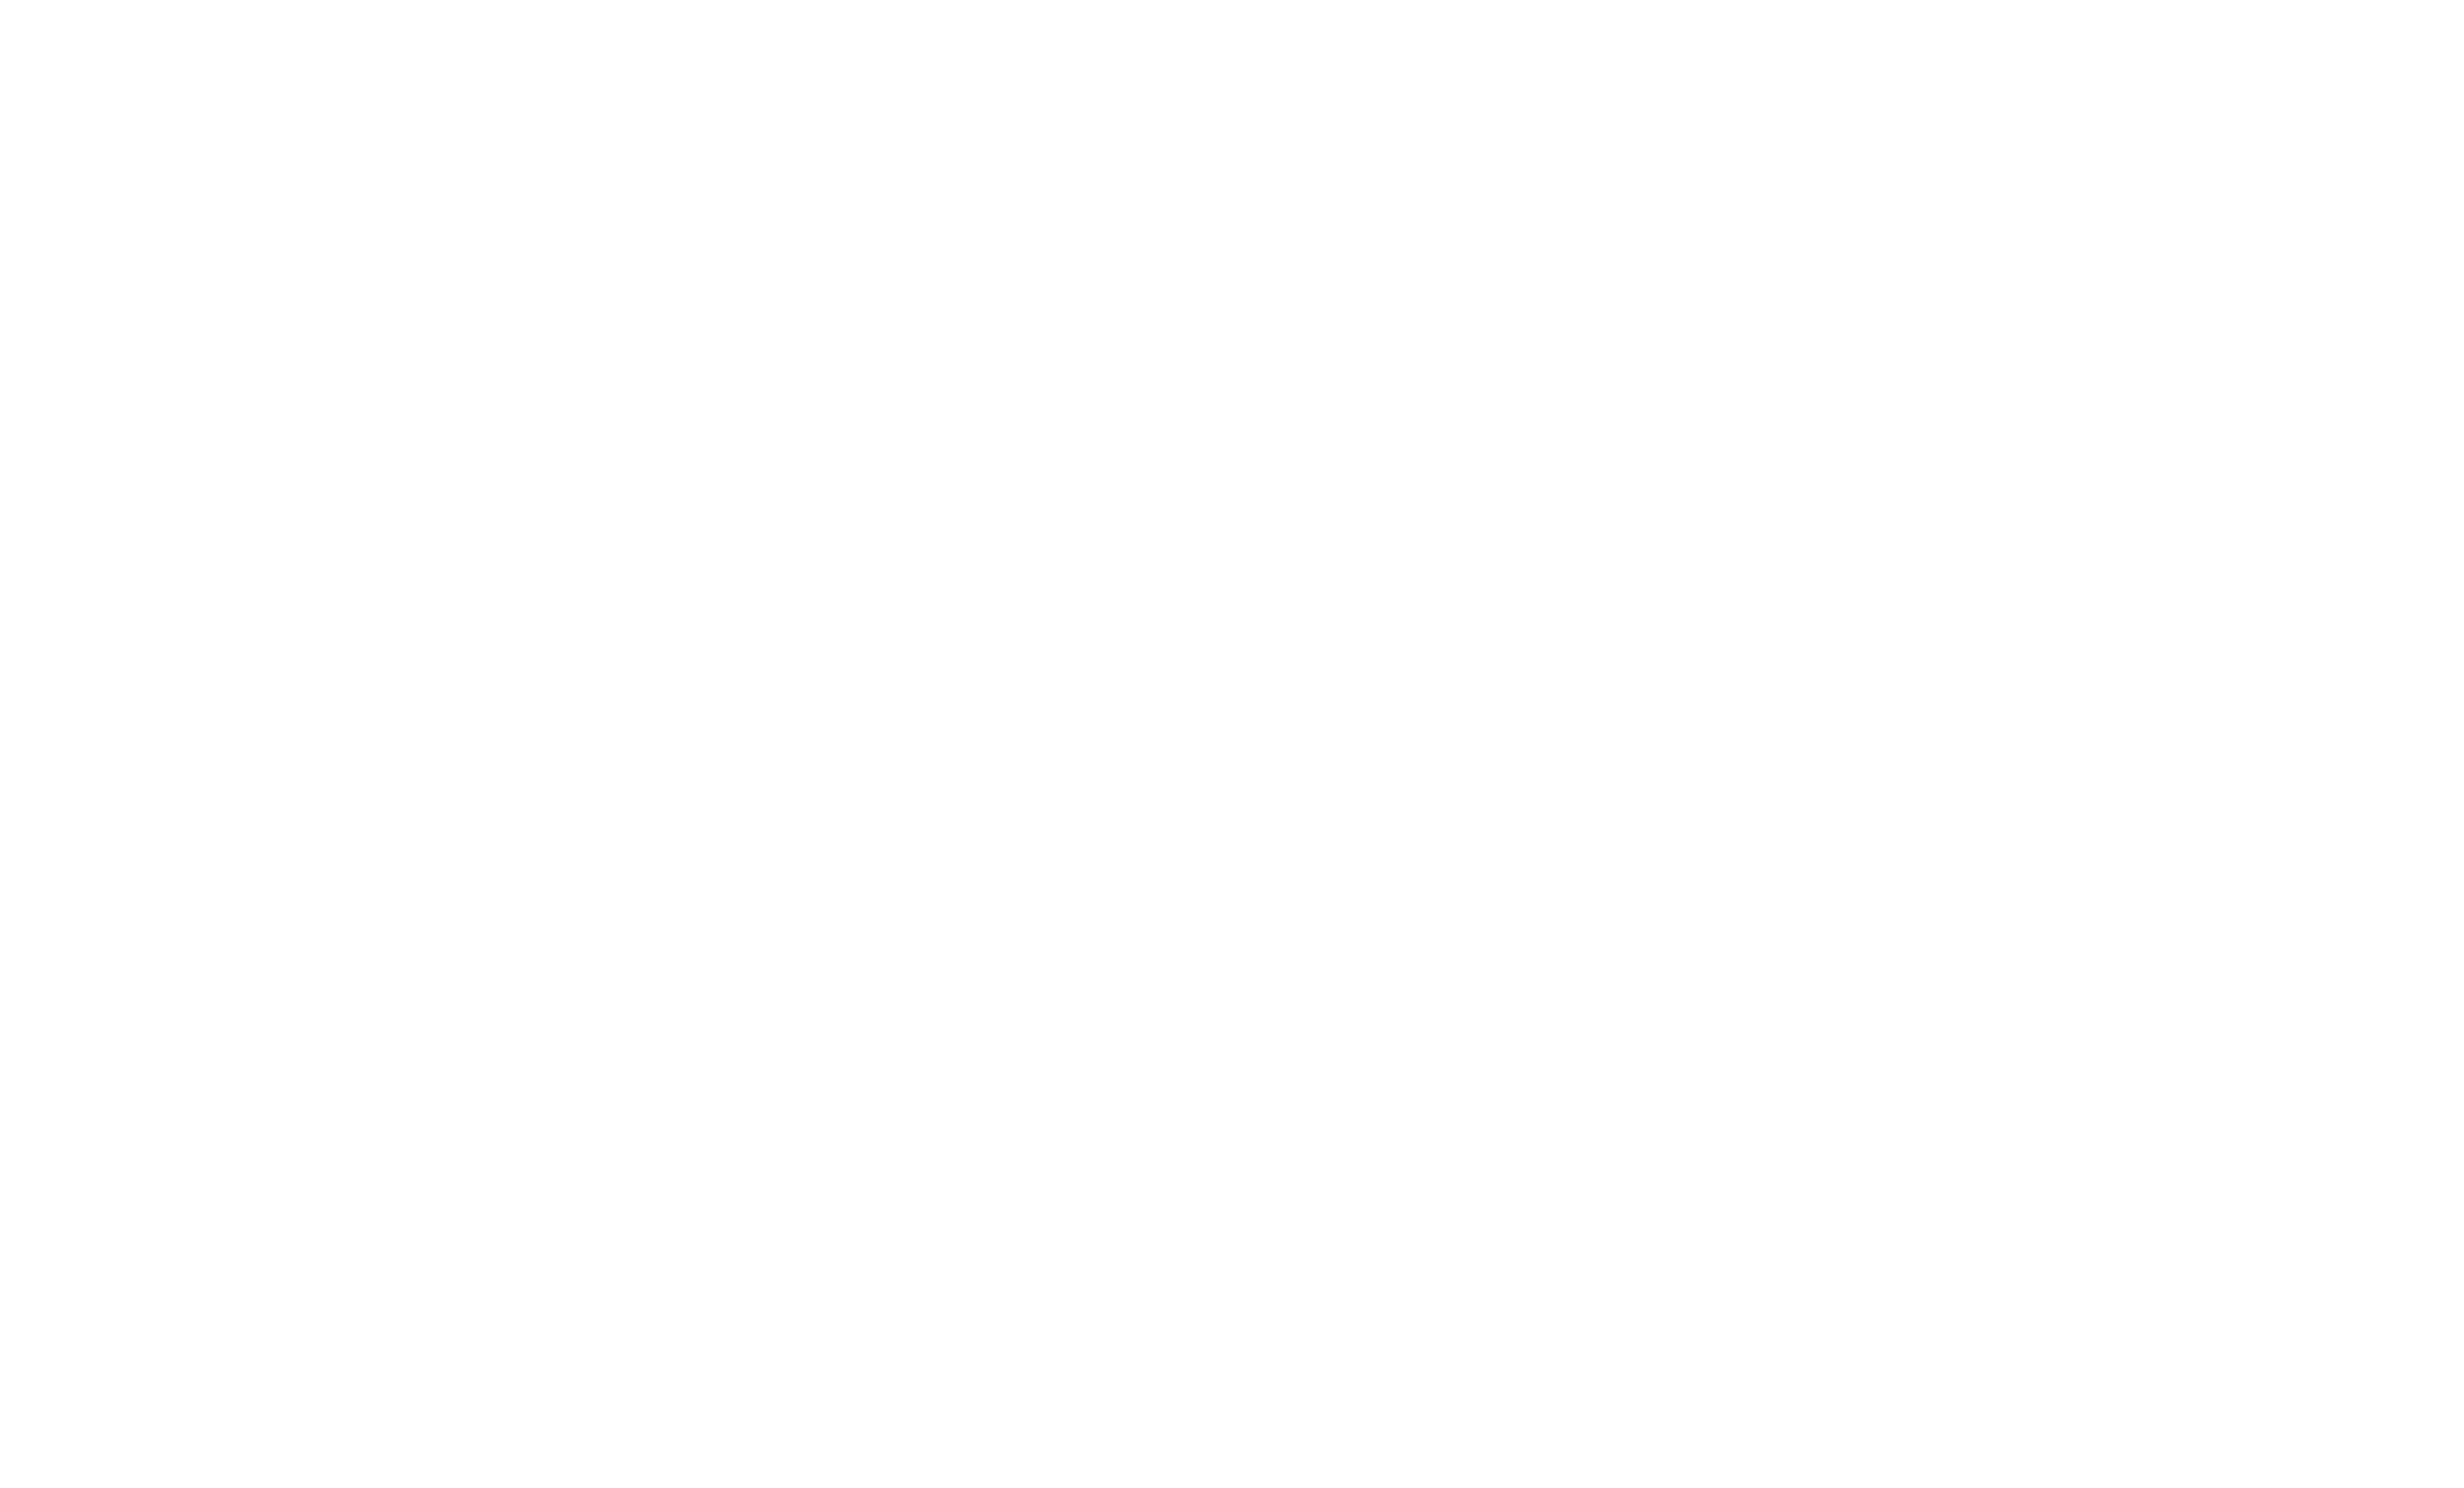 Trustchains-400dpiLogo-White